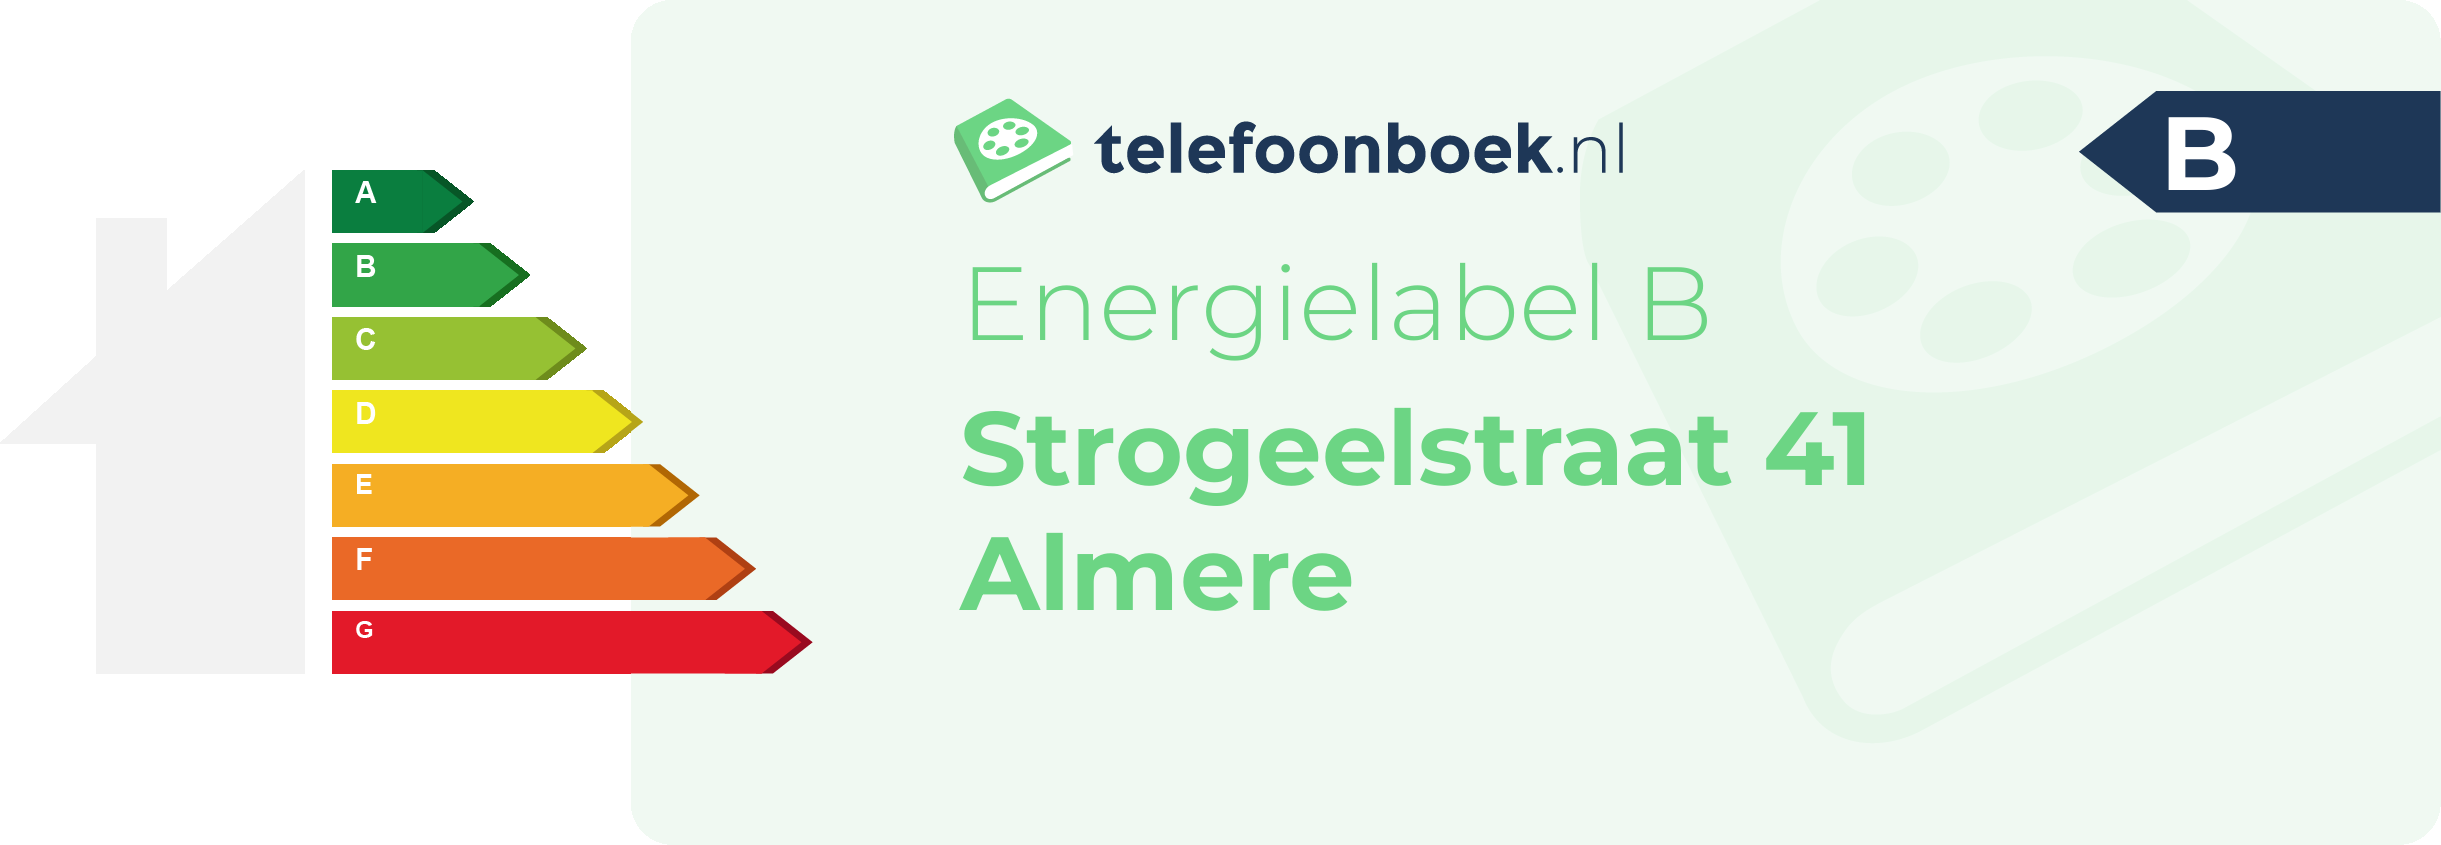 Energielabel Strogeelstraat 41 Almere